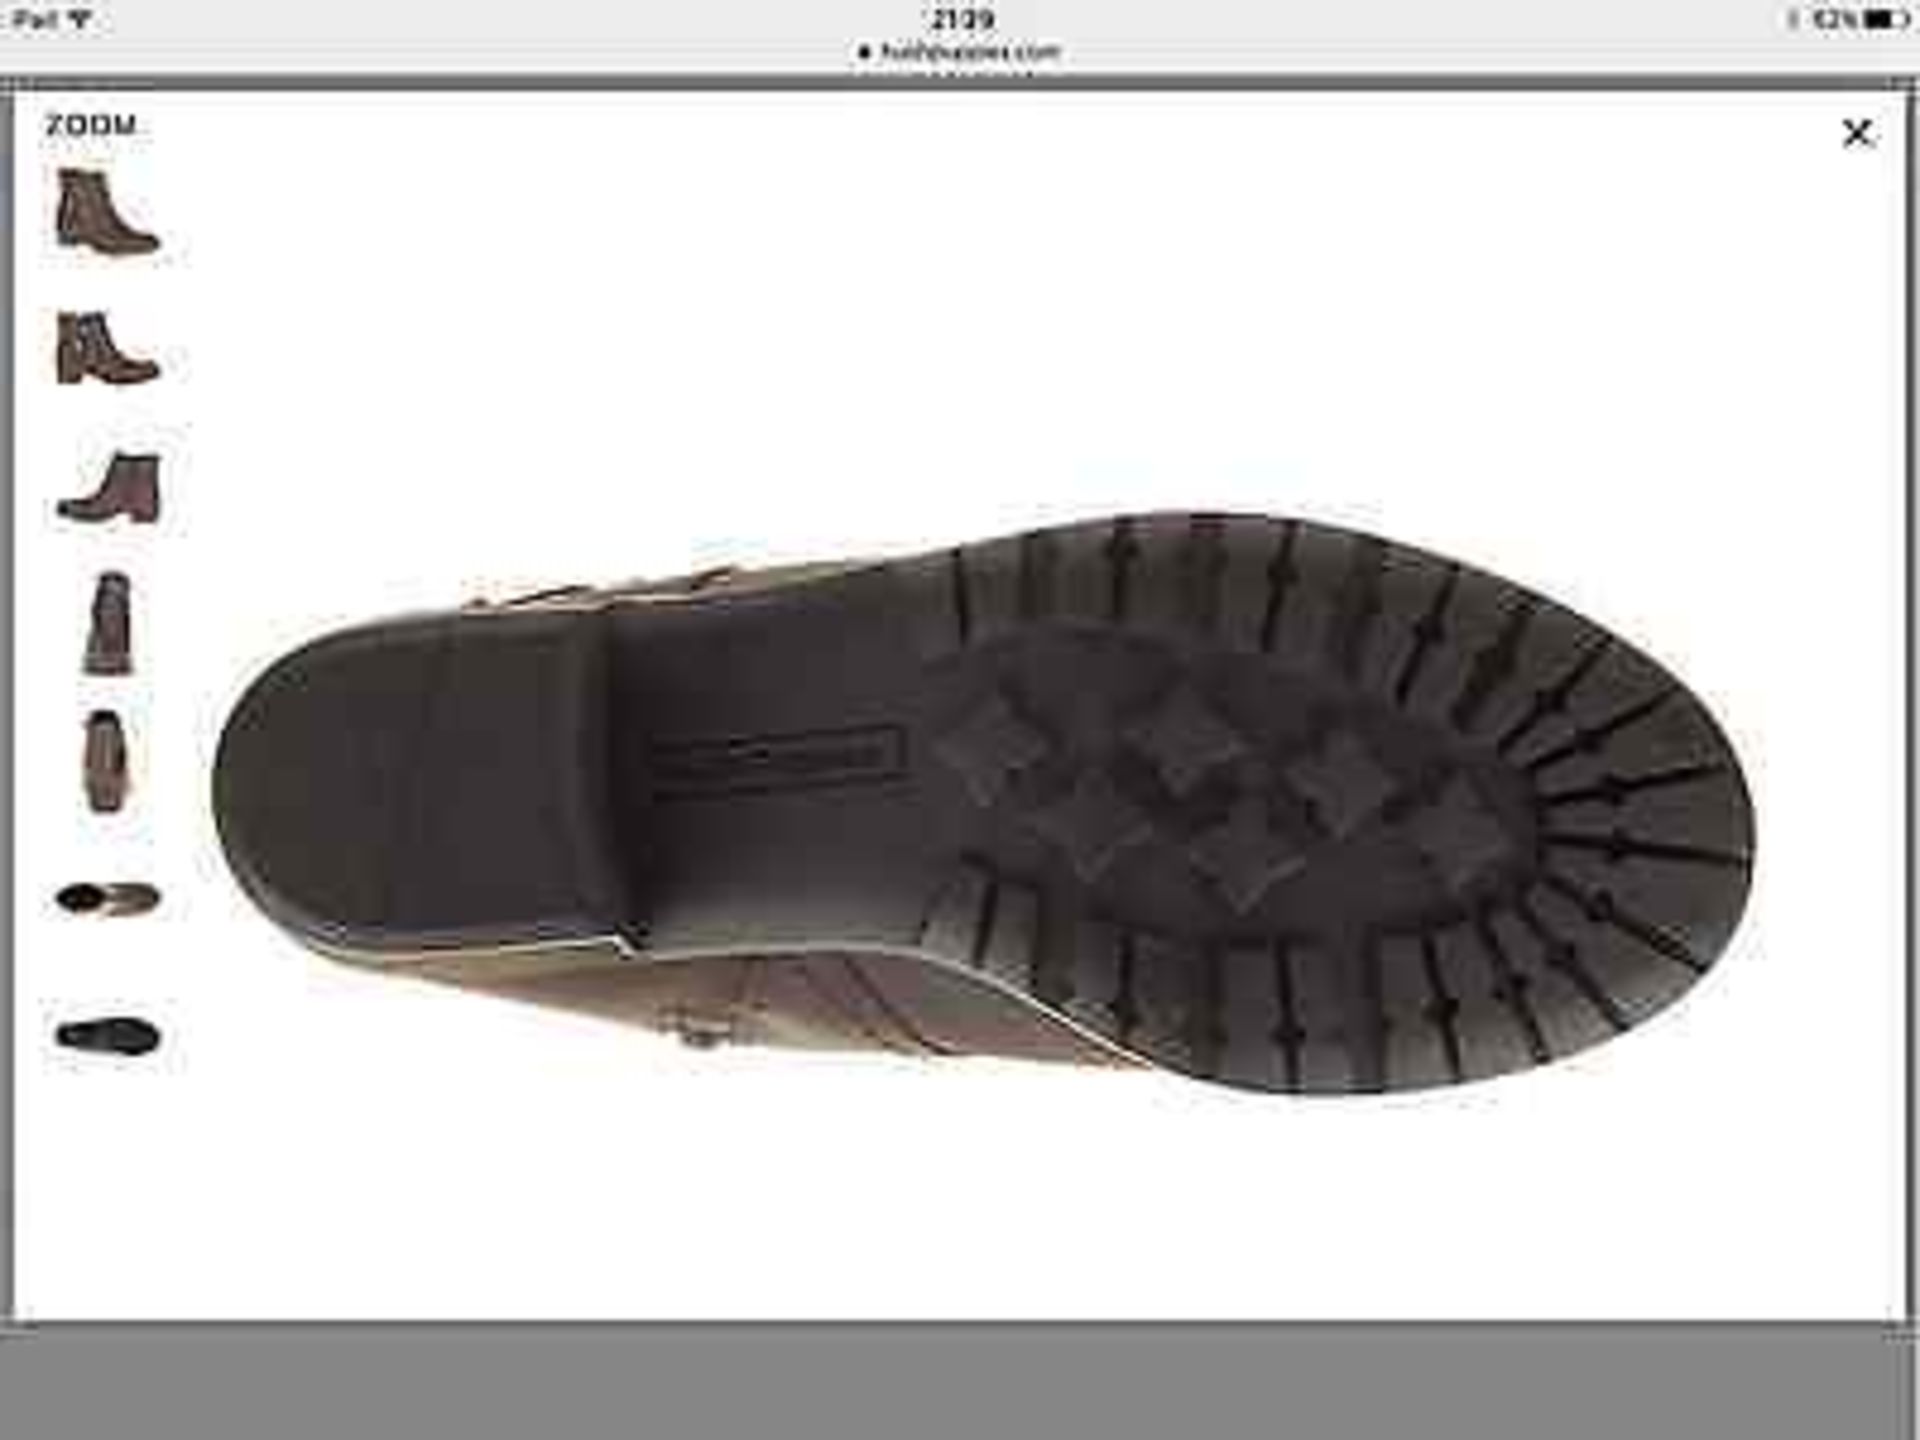 Hush Puppies Dark Brown Proud Overton Nubuck Boot, Size UK 5, RRP $130 (New with box) [Ref: ] - Image 9 of 9